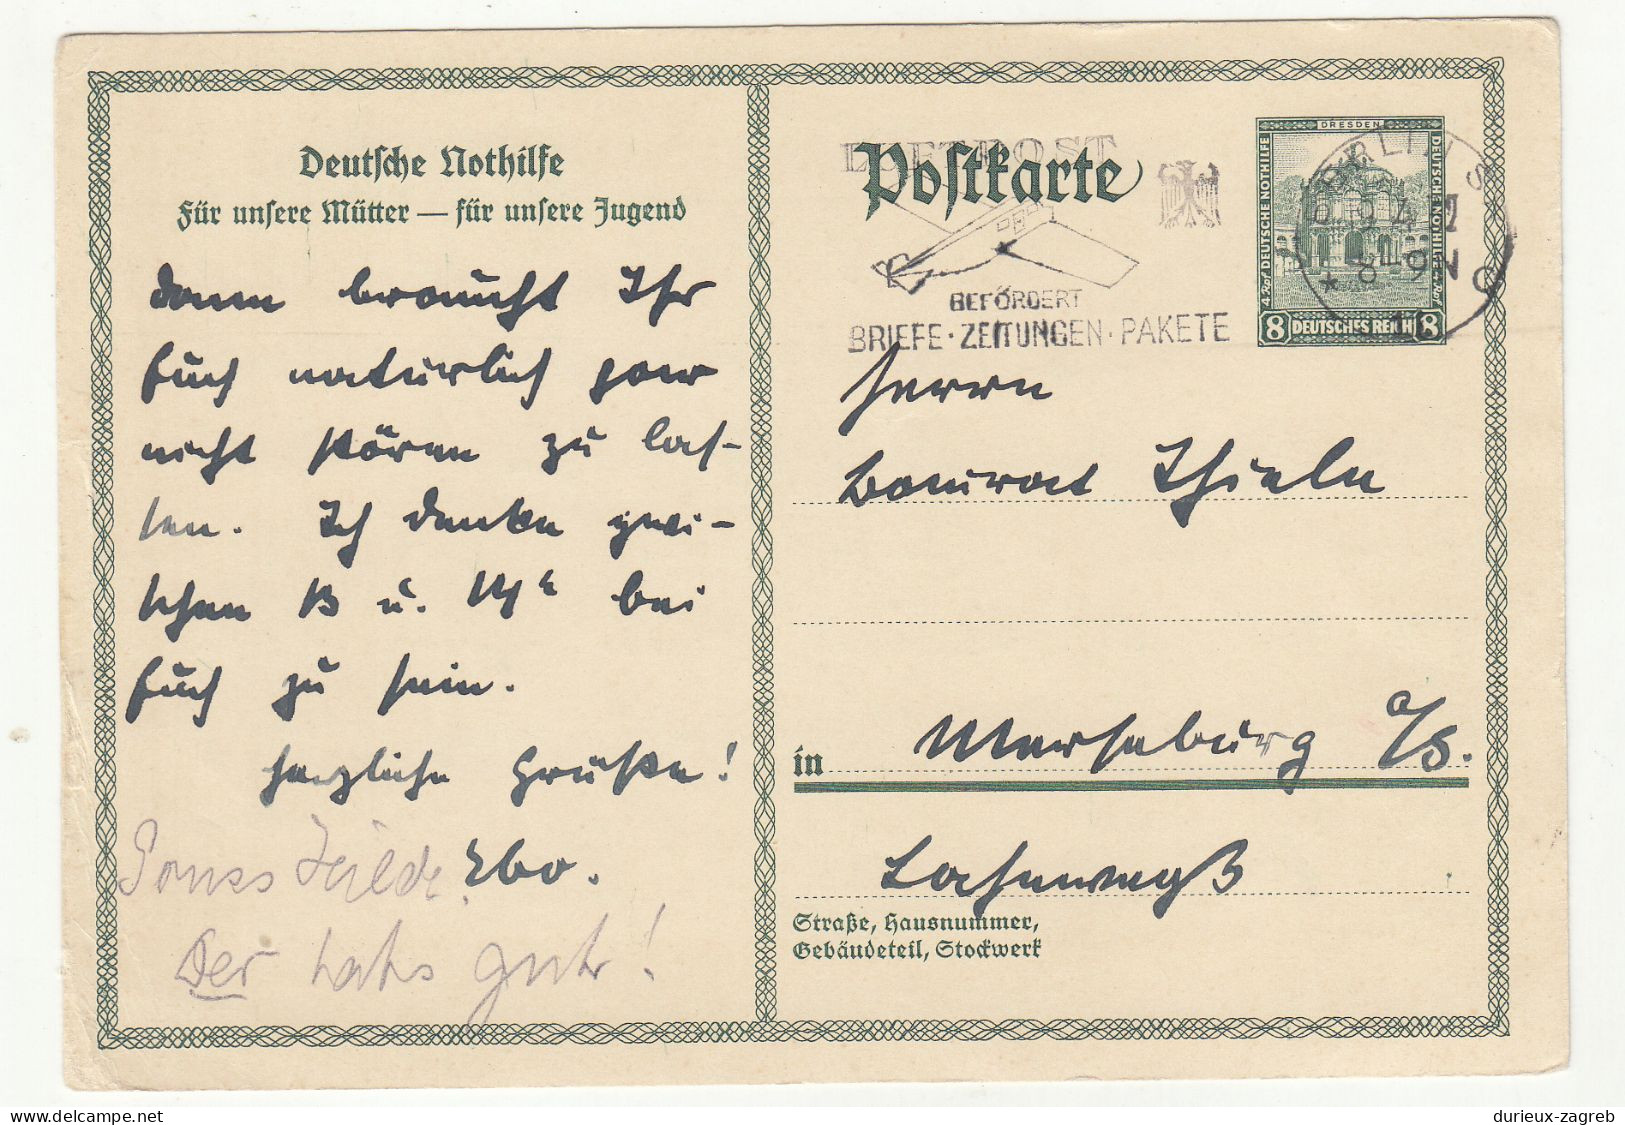 Germany Deutsche Nothilfe Postal Stationery Postcard Posted 1932 - Luftpost Slogan Postmark B240401 - Cartes Postales